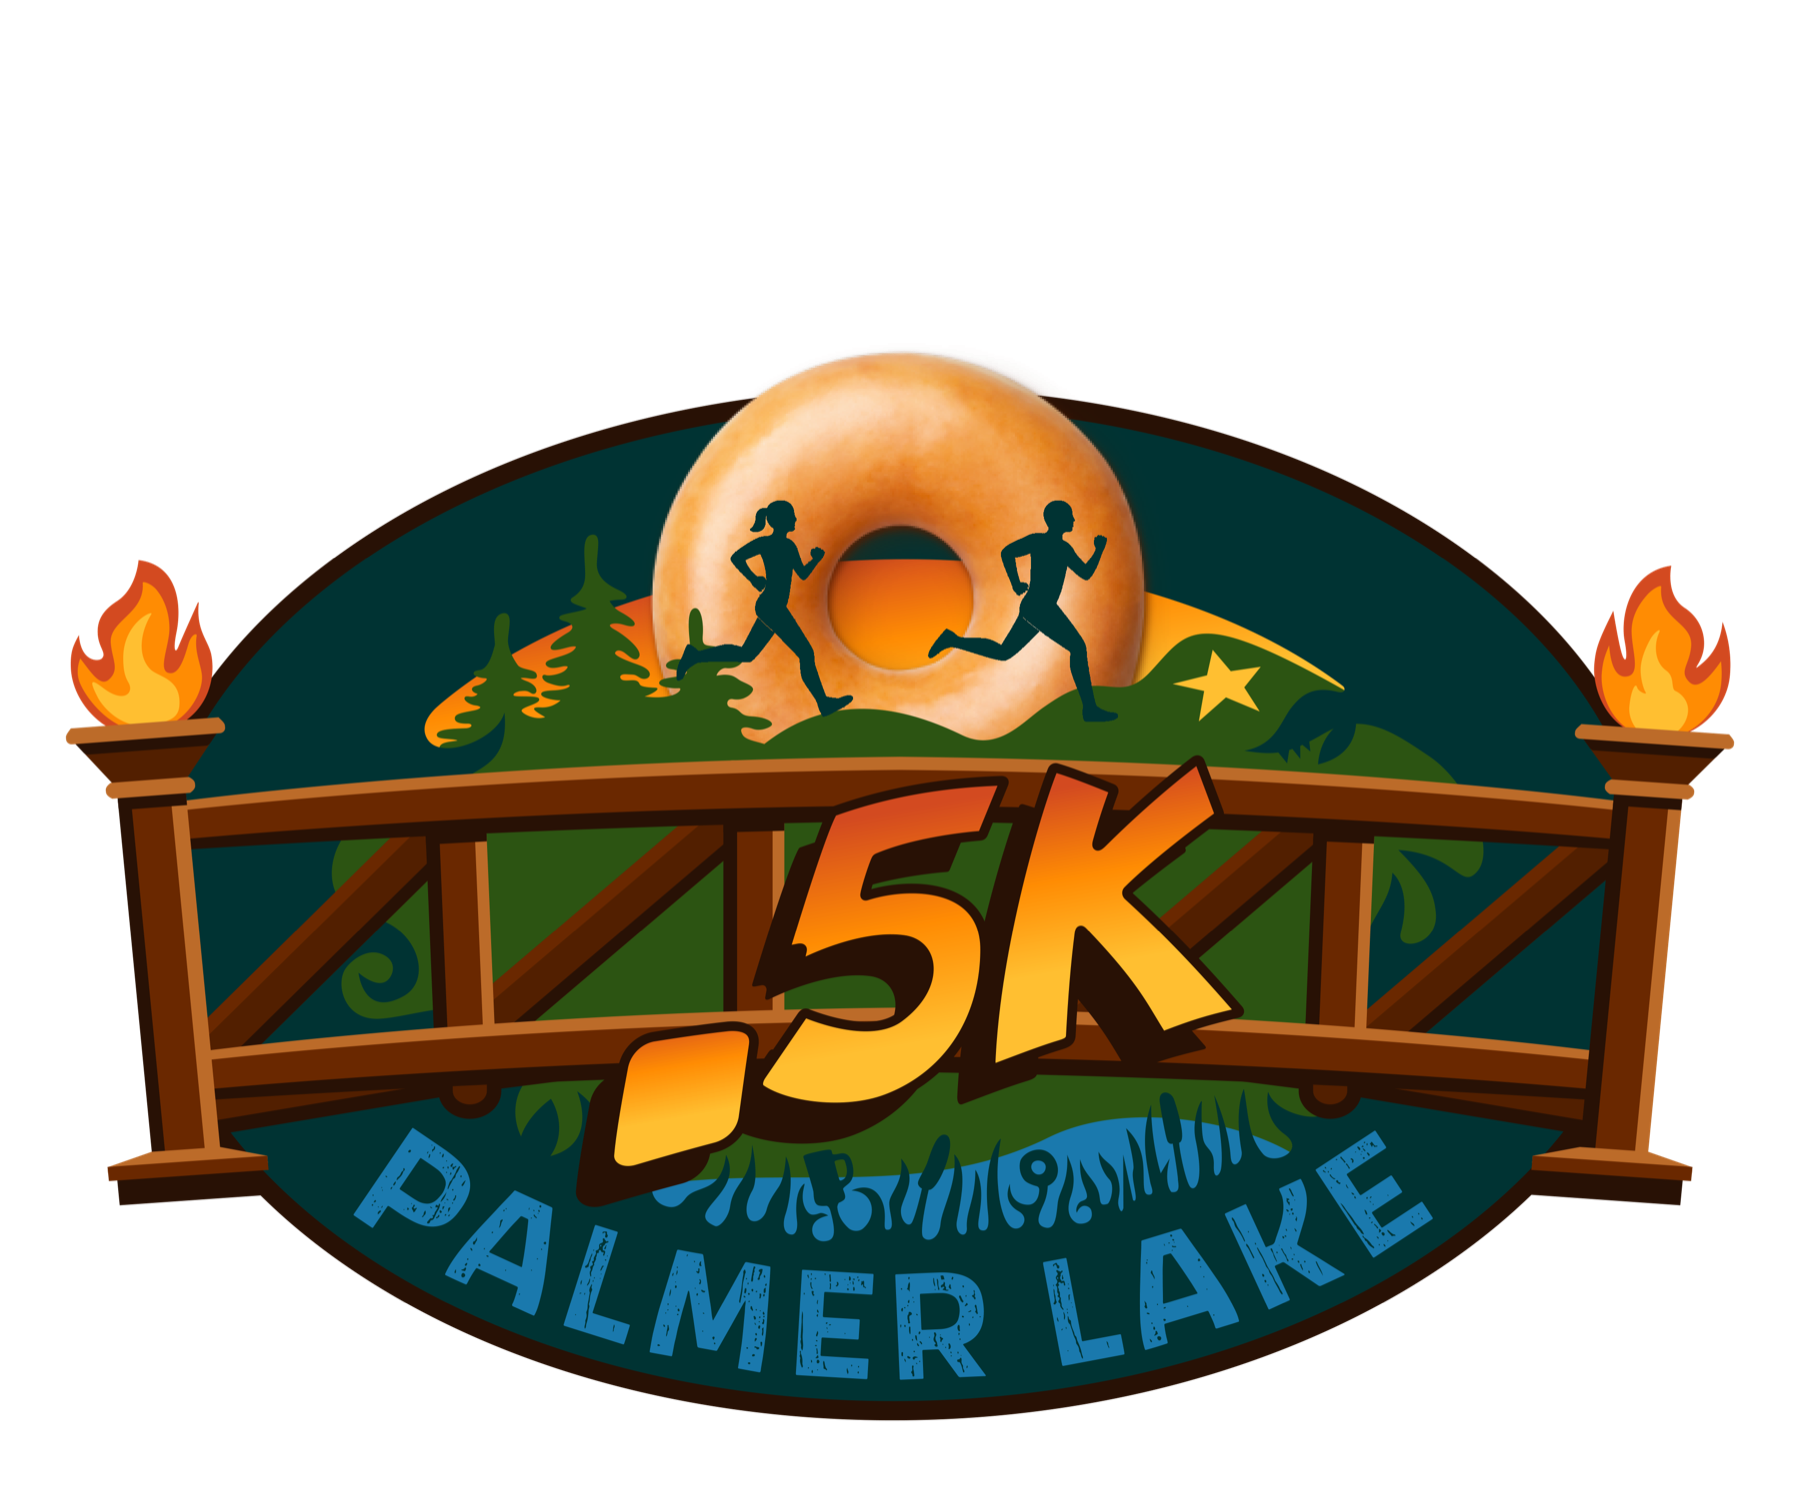 The Palmer Lake .5K